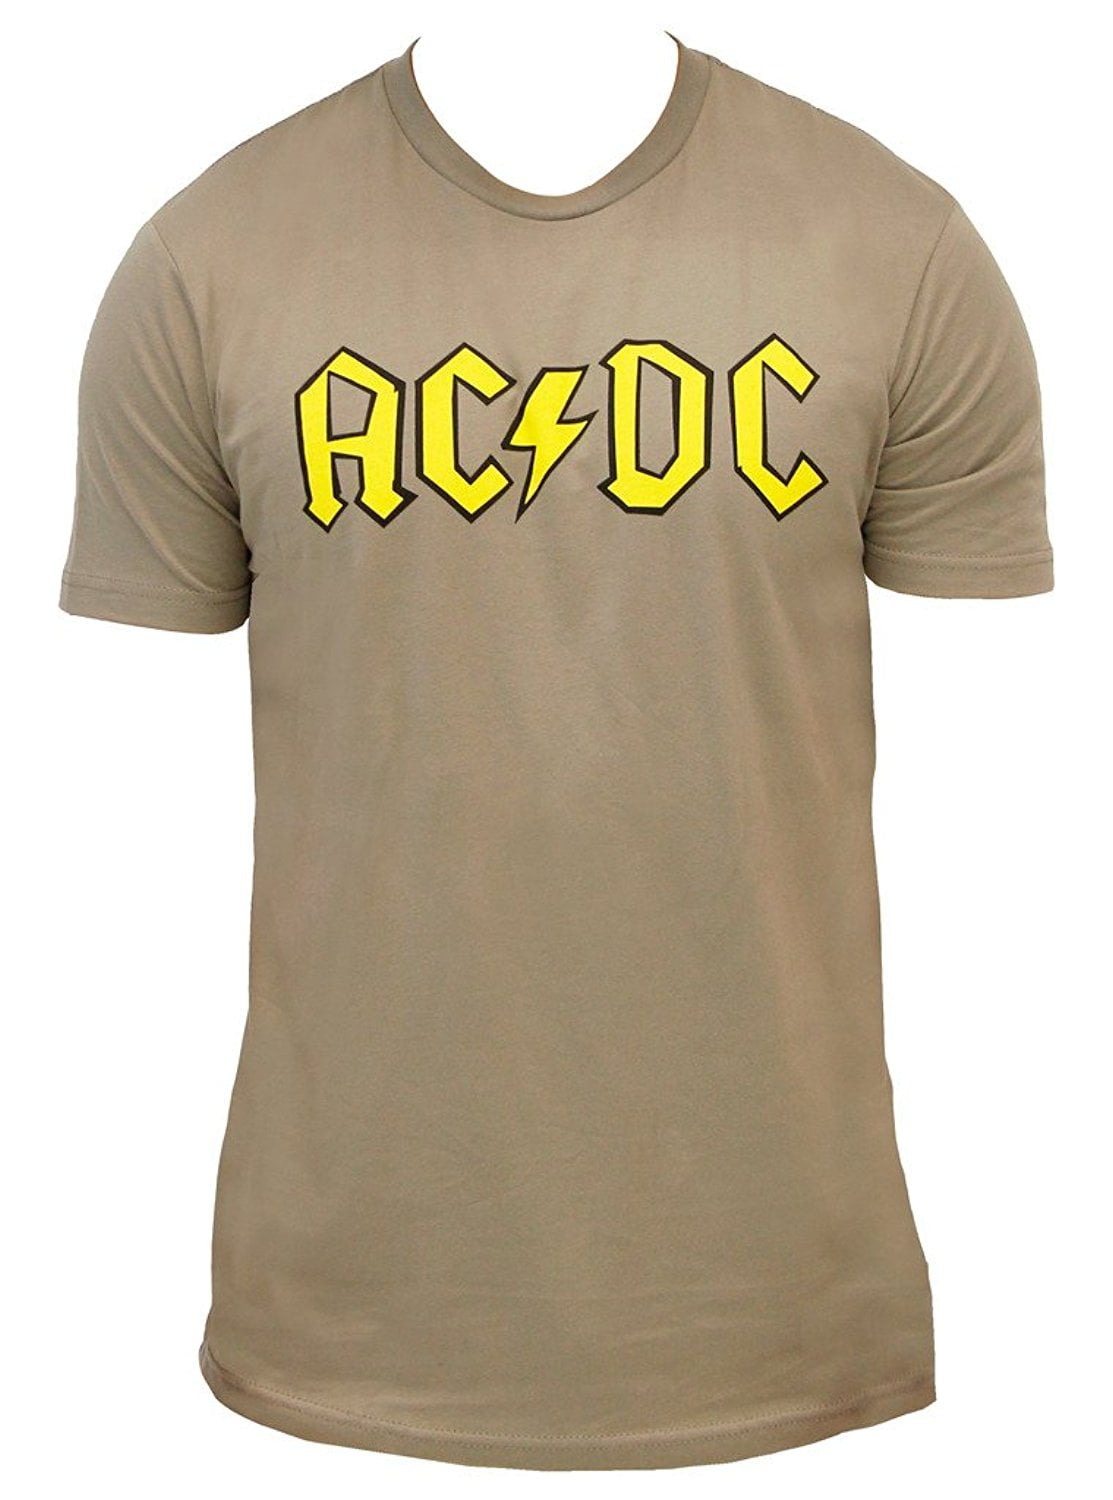 Футболка AC DC Аддисон. Футболка AC DC серая. Костюм AC DC. AC DC логотип на футболку. Реплика футболки